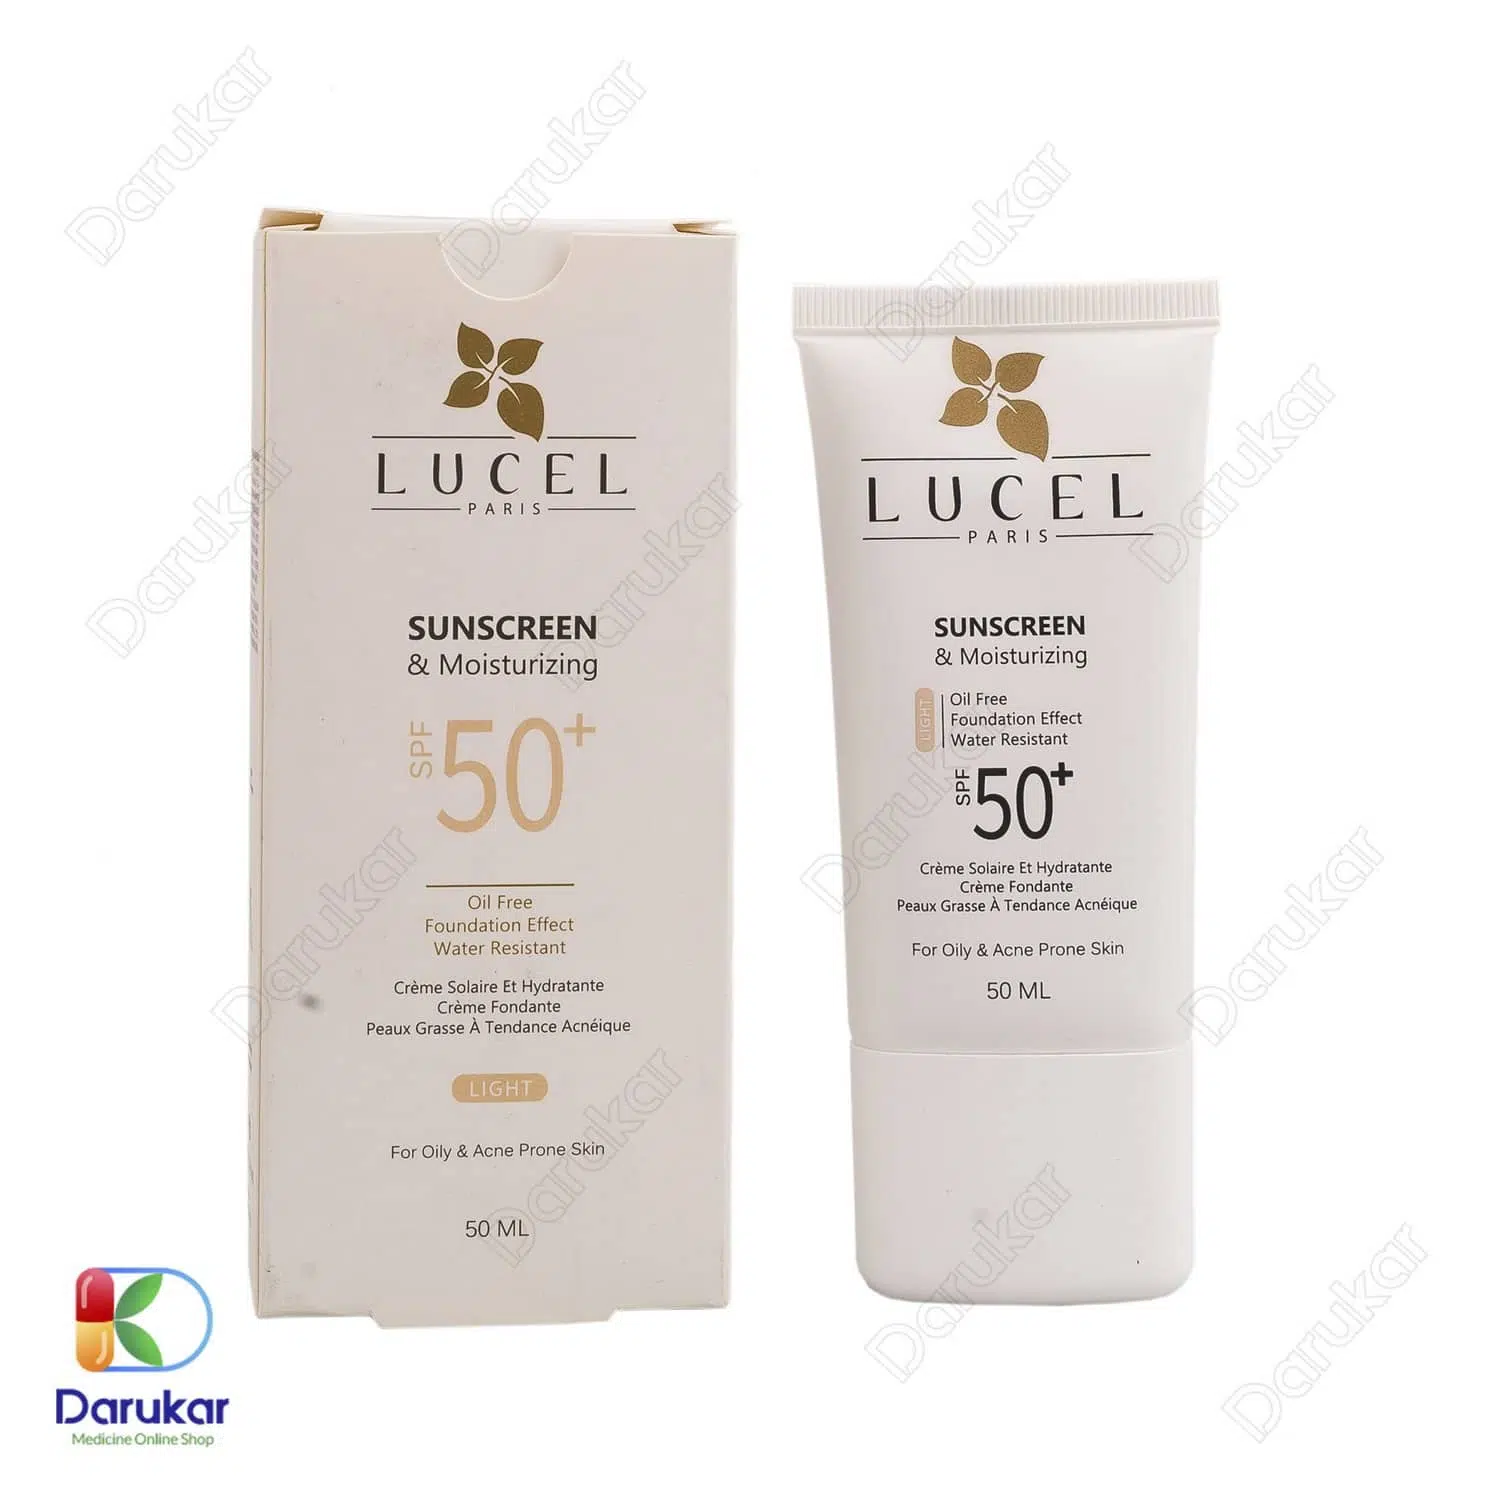 lucel paris sunscreen for oily acne prone skin light